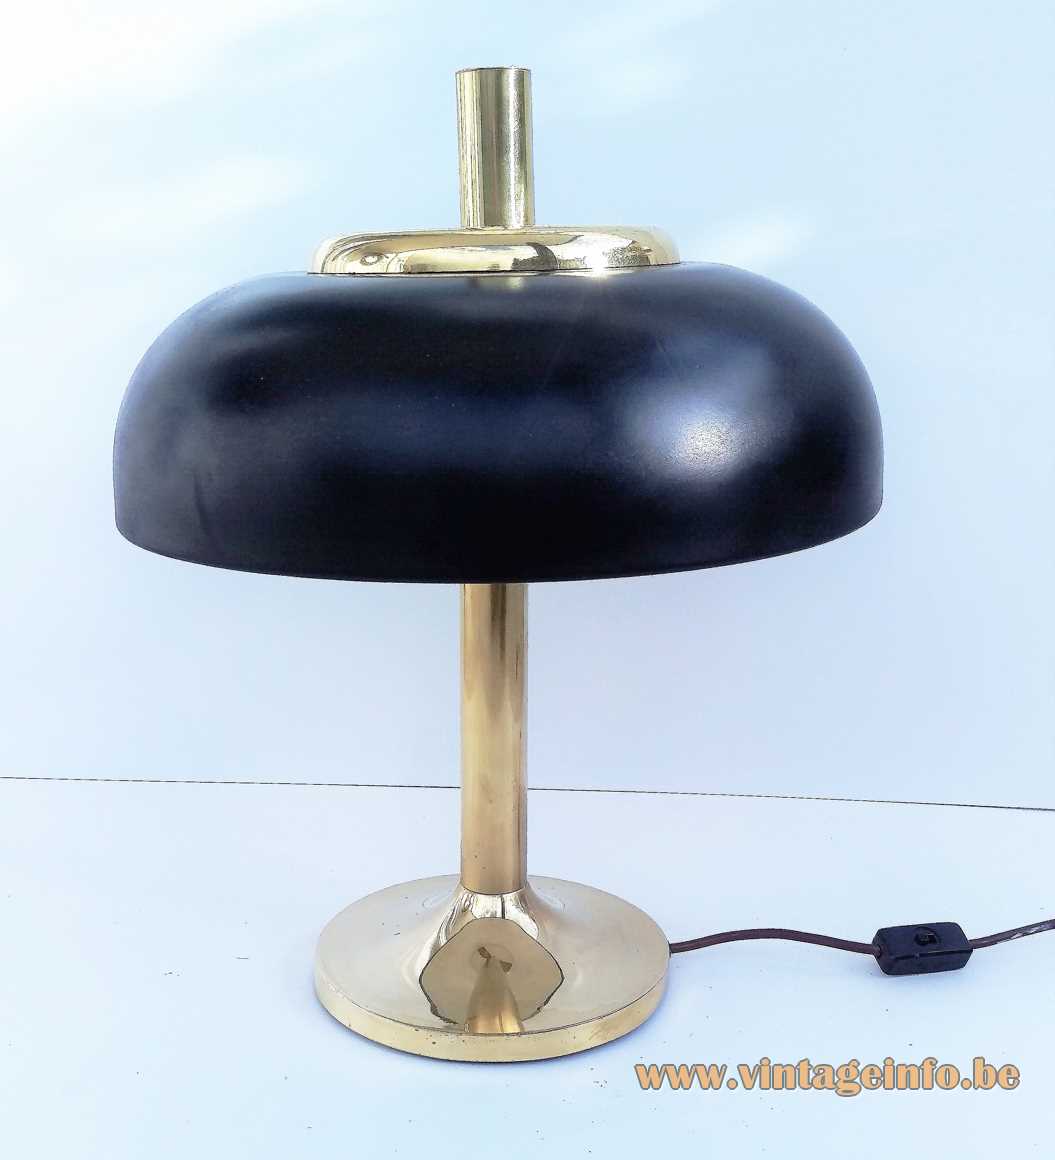 Solken-Leuchten mushroom desk lamp round brass base & rod black UFO lampshade 1970s Hillebrand Germany